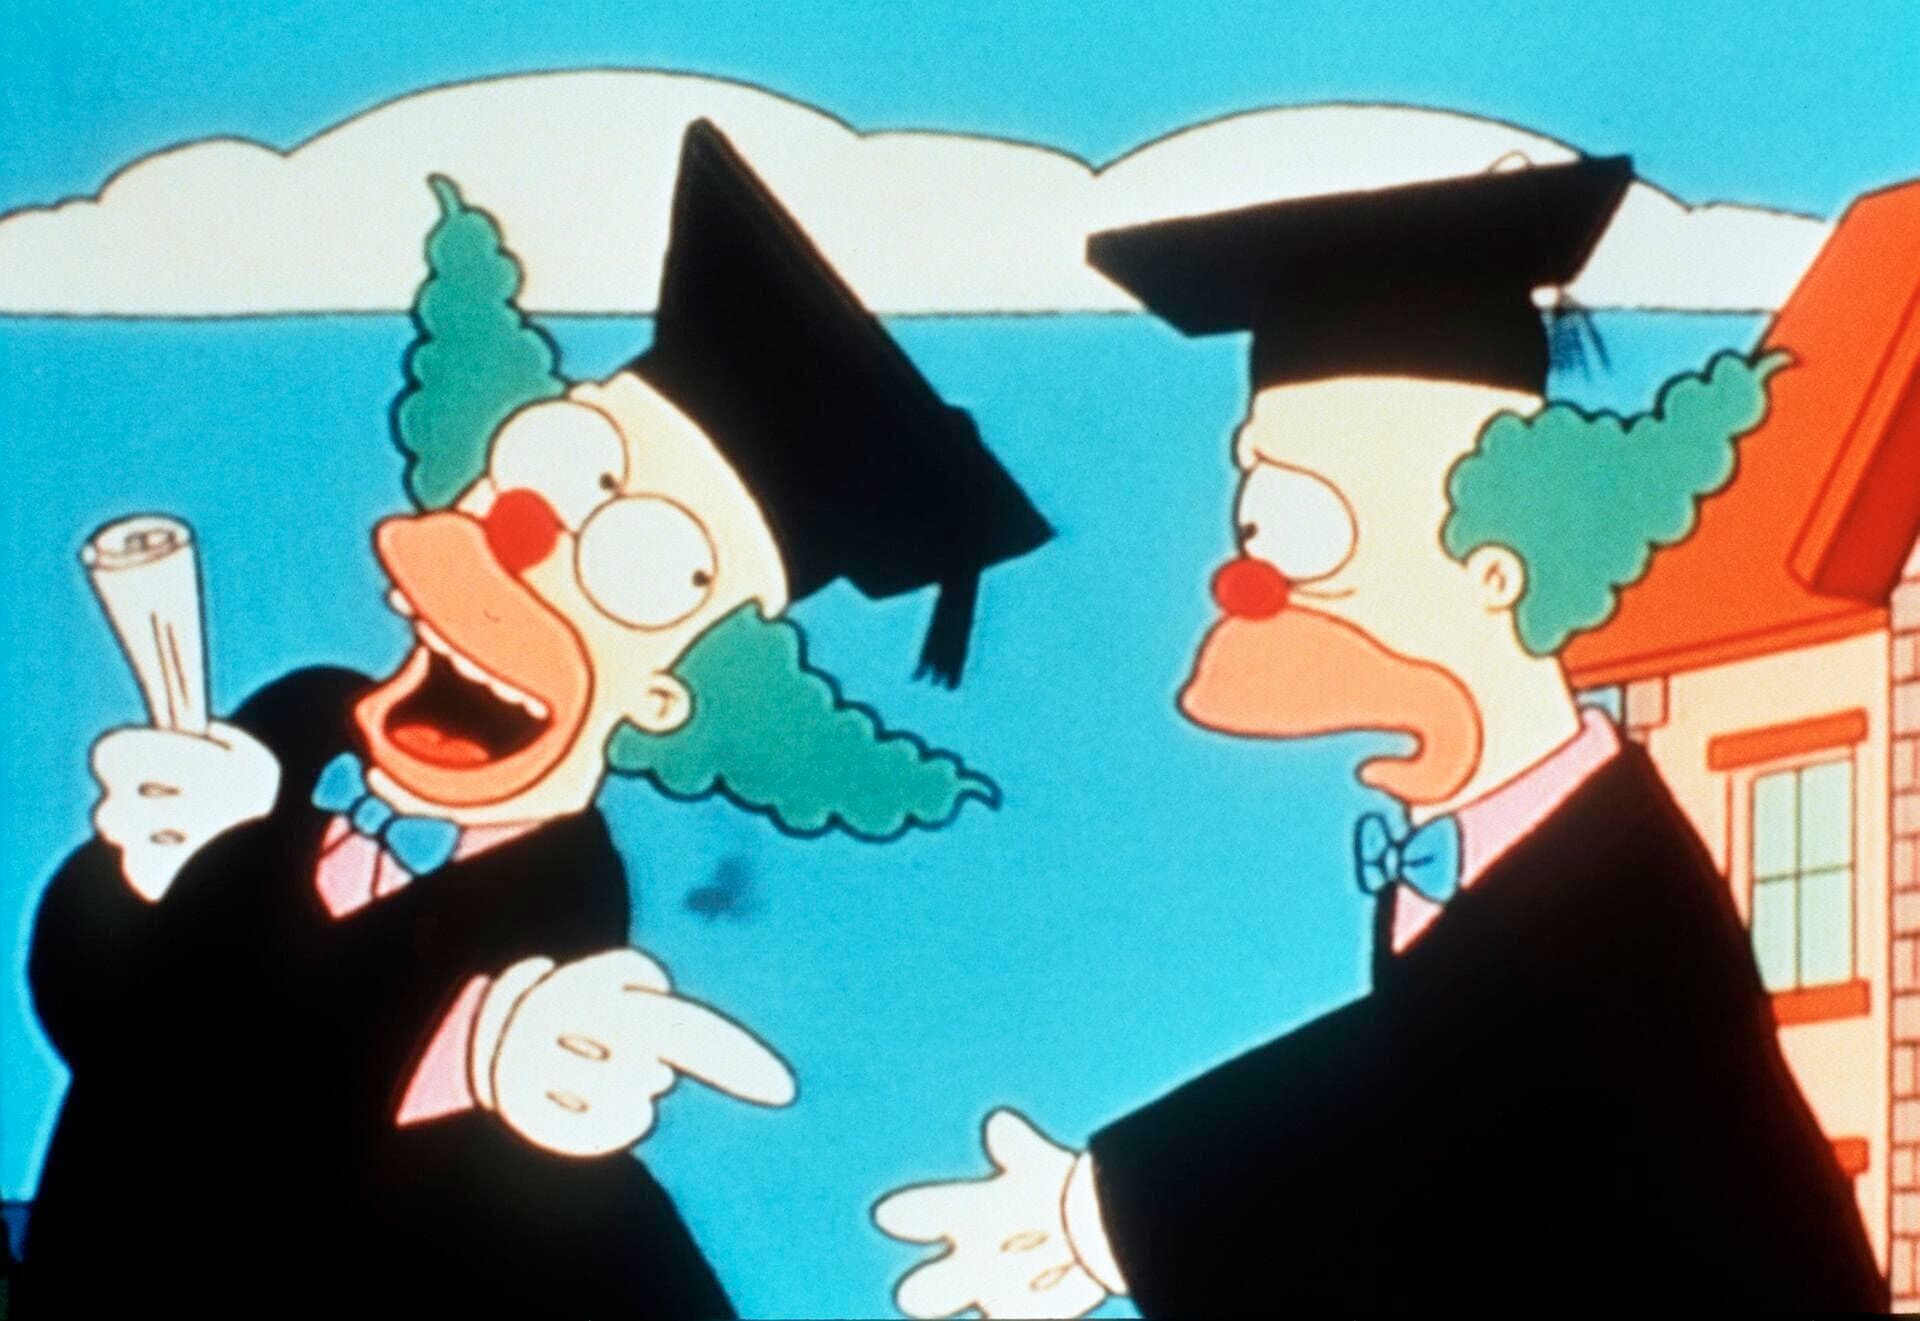 The Simpsons - Homie the Clown